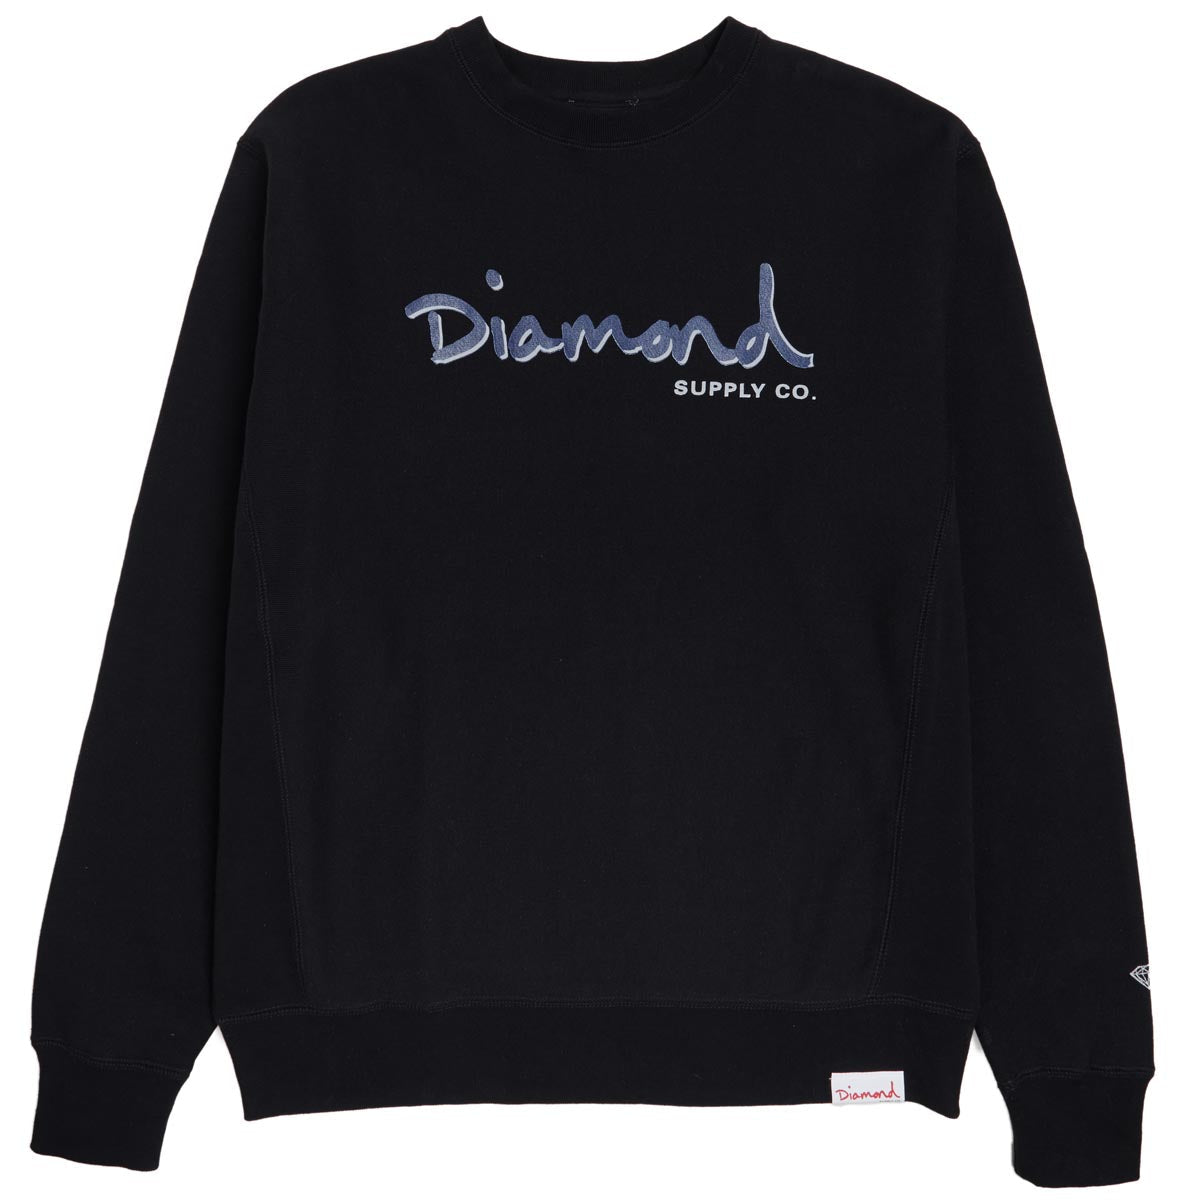 Diamond Supply Co. Outline Crewneck Sweatshirt - Black image 1